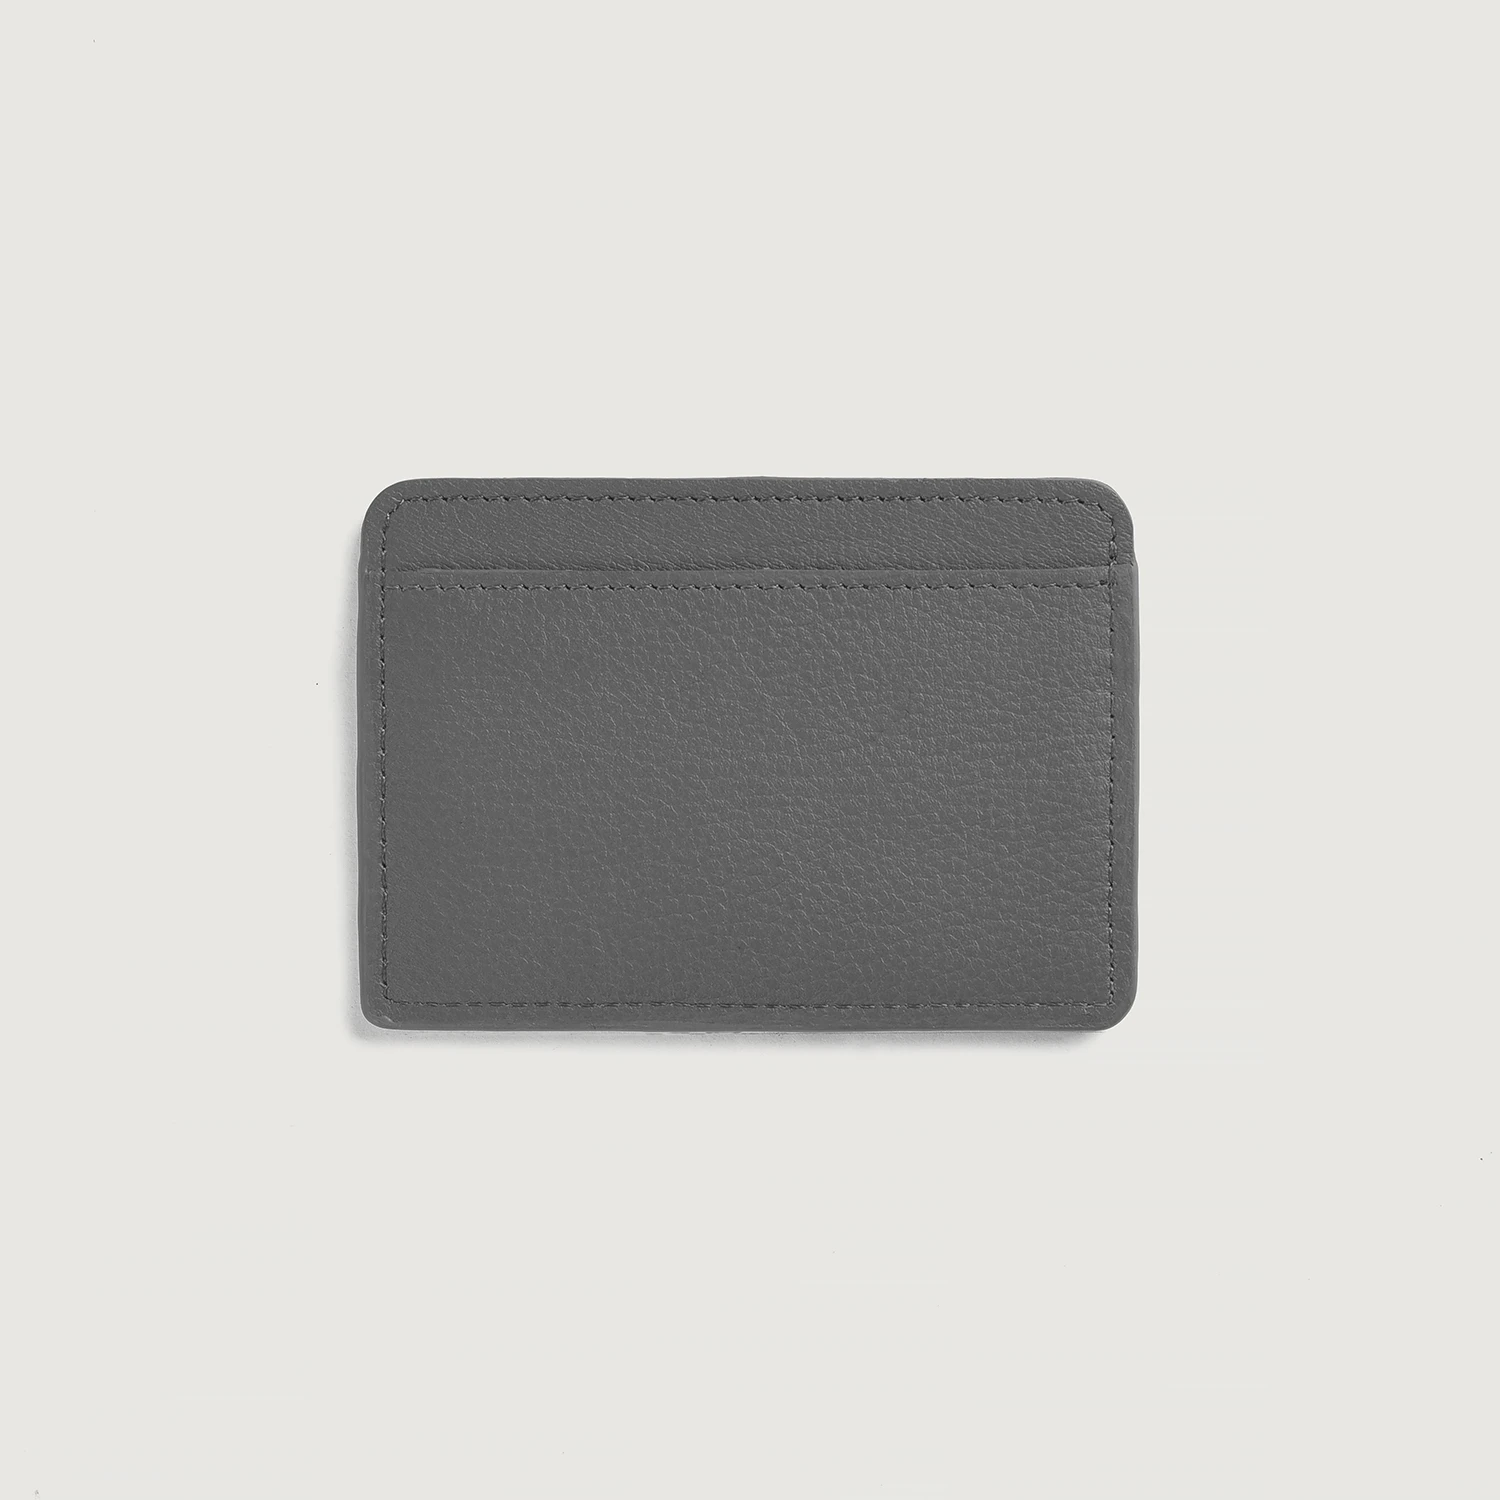 Karl Grey Leather Card Holder
